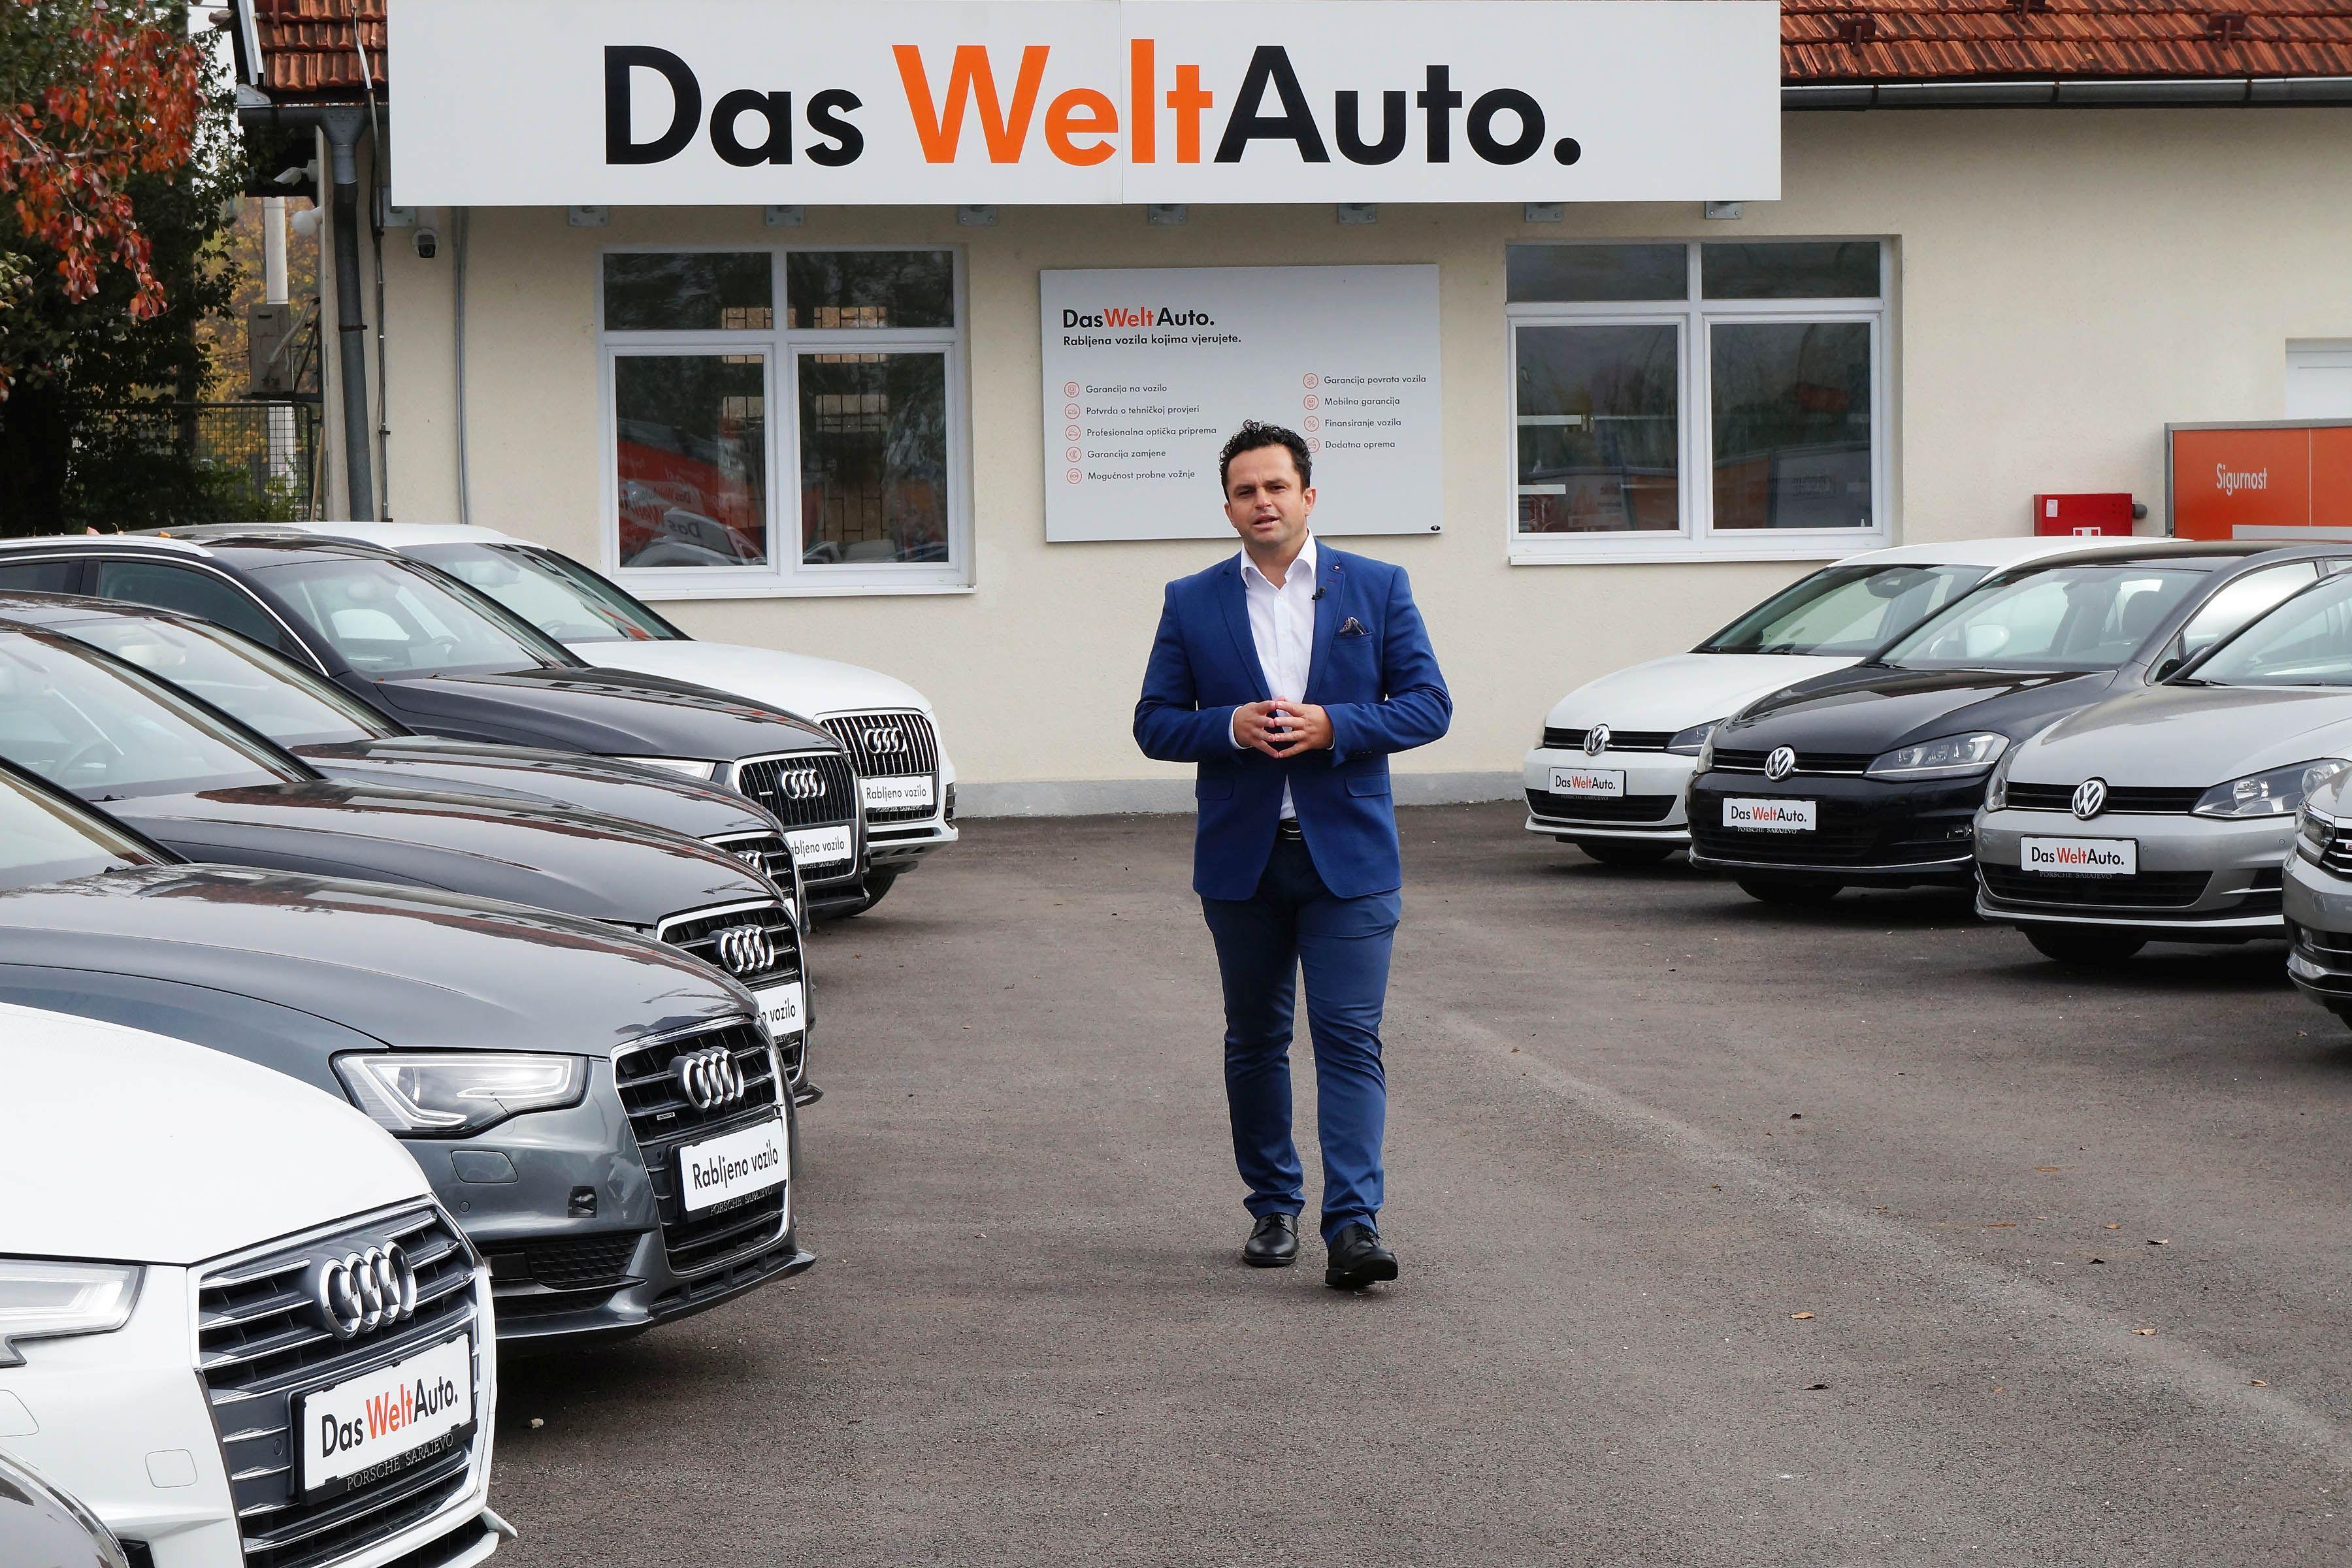 DasWeltAuto: Više od 1.000 prodatih vozila od aprila 2017. do kraja oktobra 2018. - Avaz